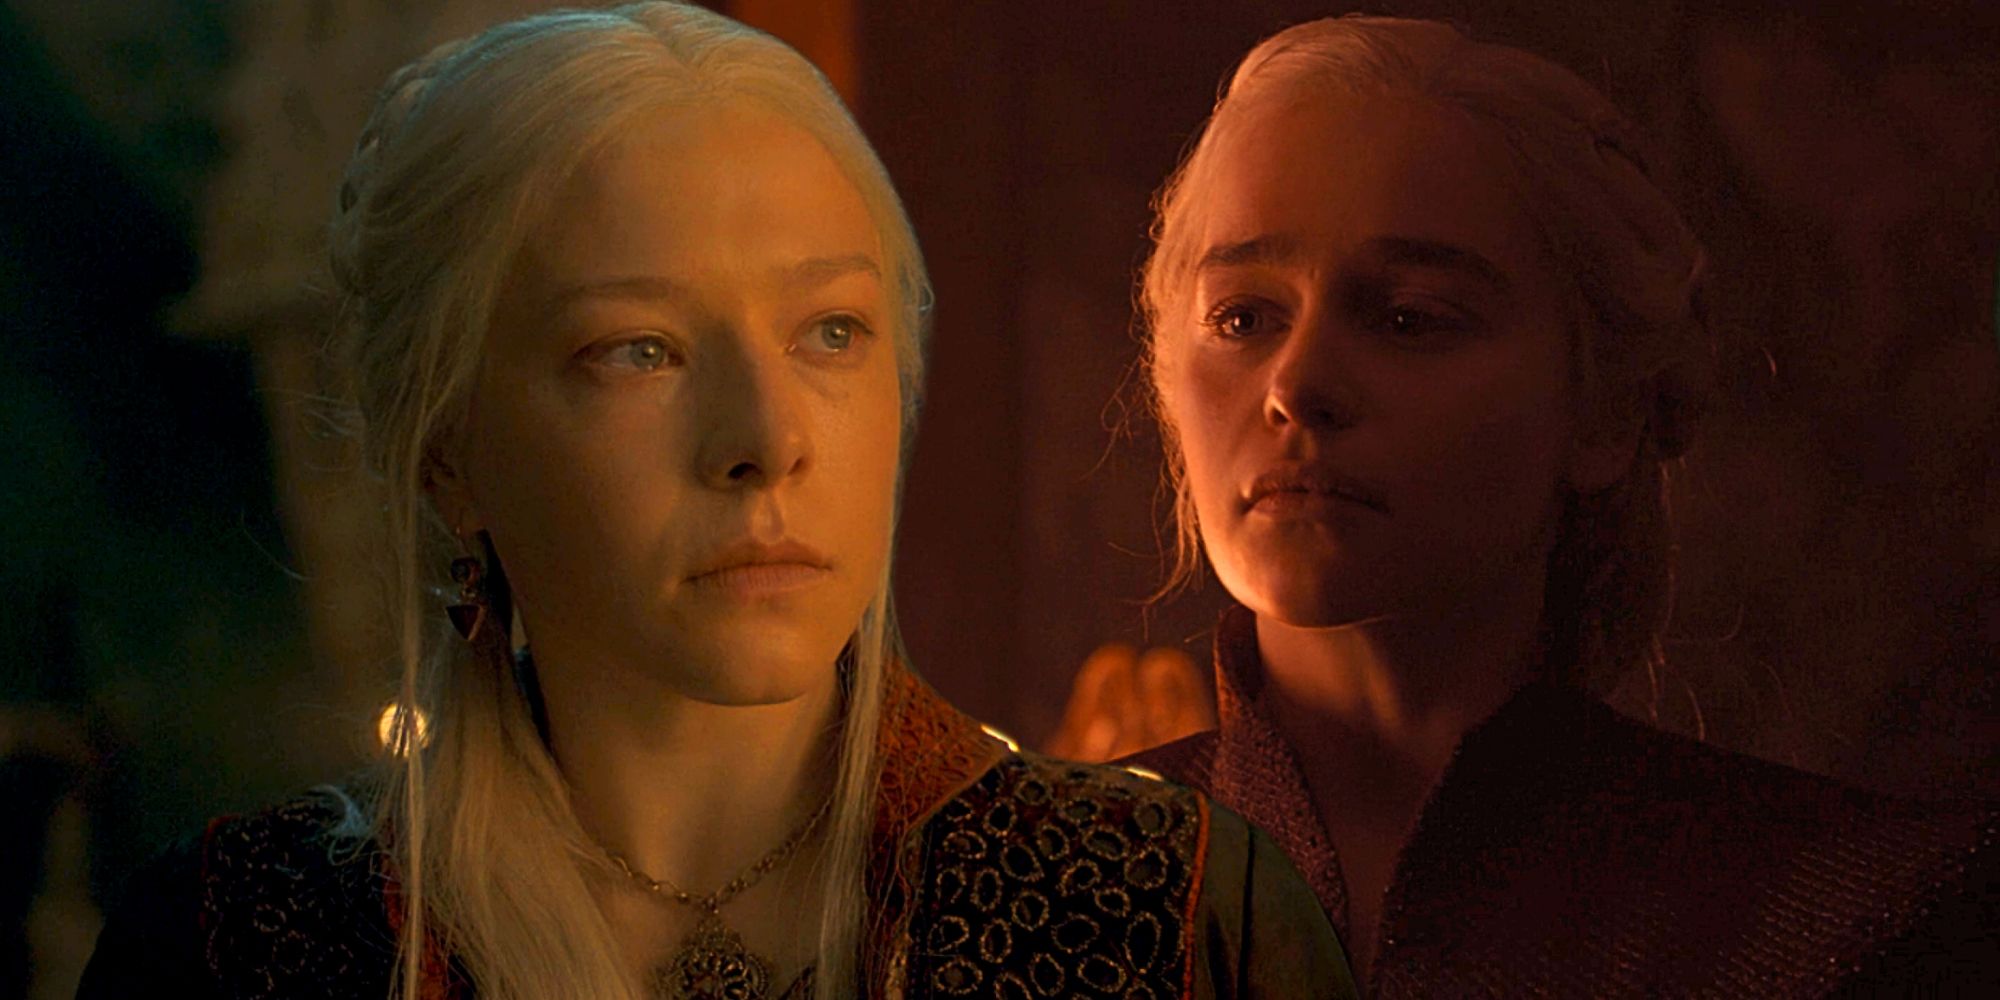 Emma D'Arcy as Rhaenyra Targaryen and Emilia Clarke as Daenerys Targaryen